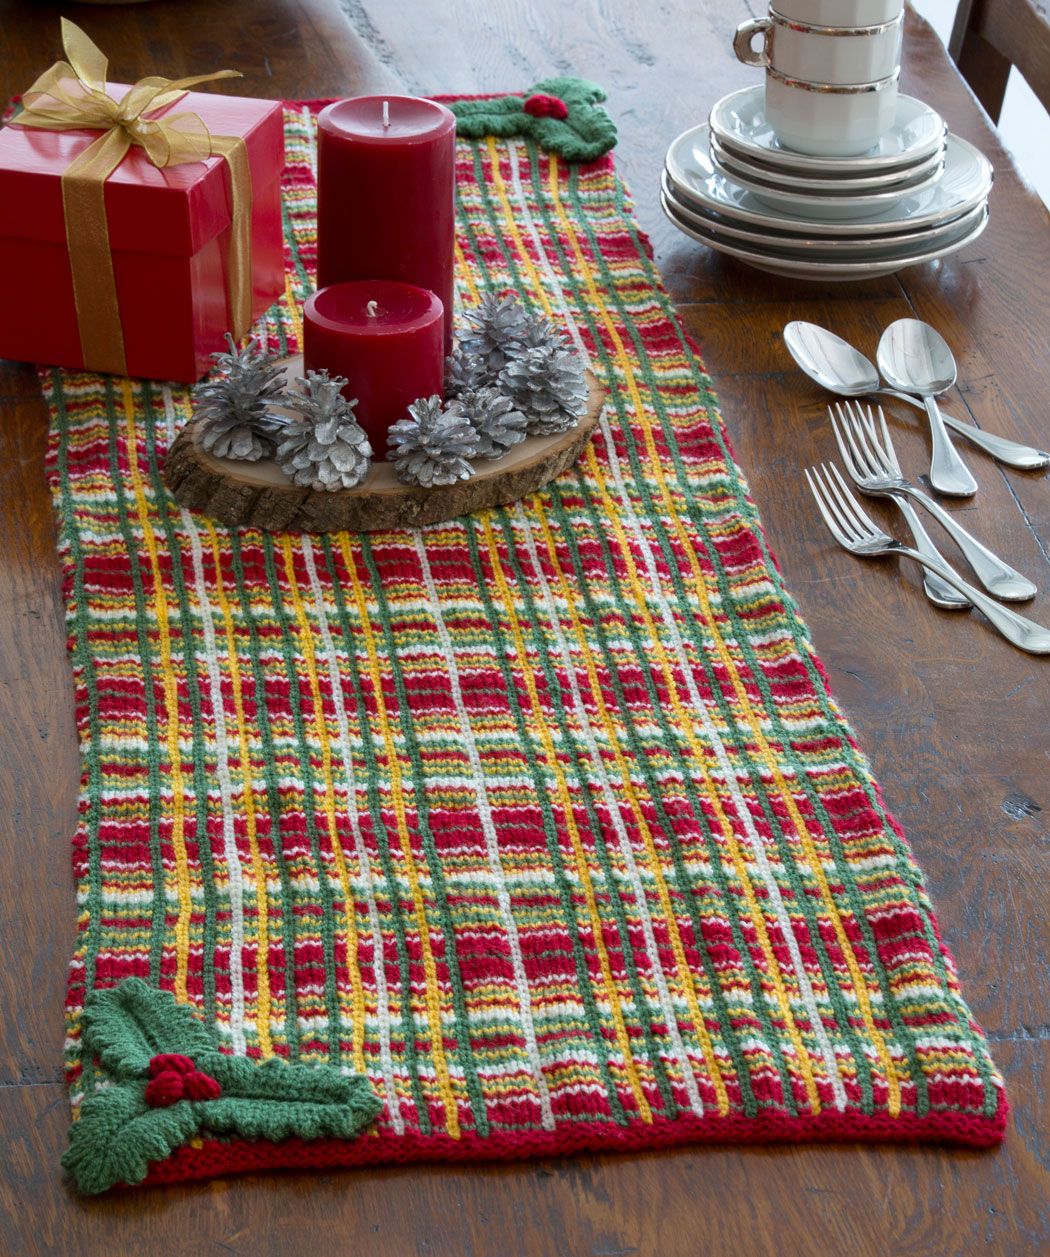 knit2 - خرید رومیزی + انواع رومیزی